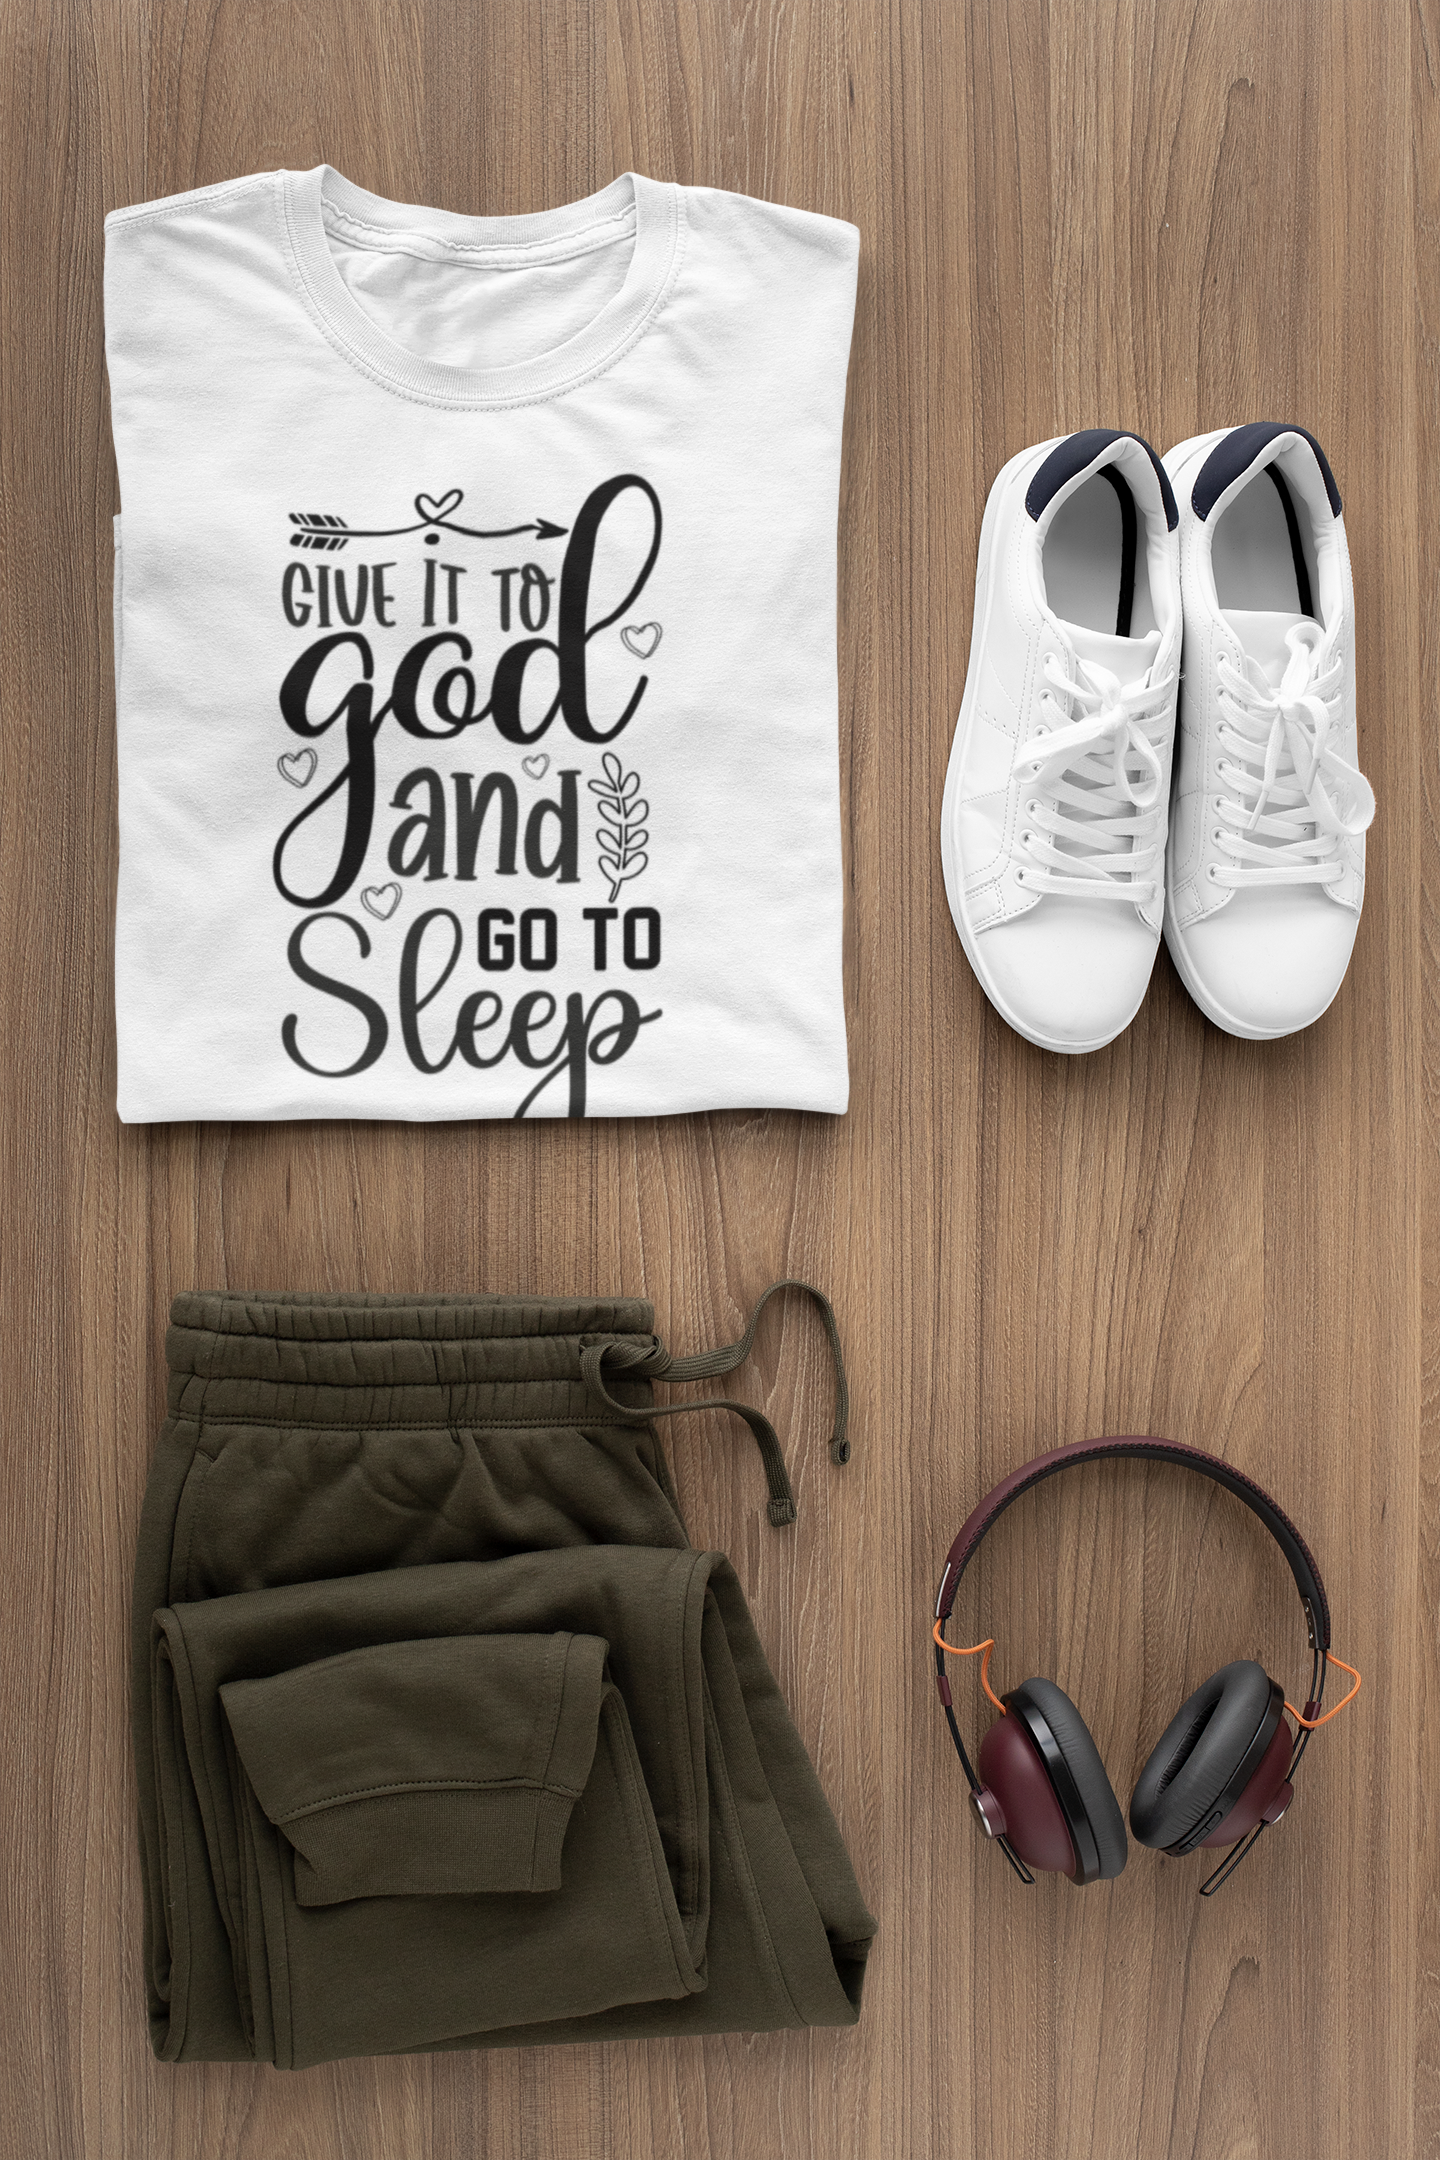 Faith T-Shirts | Give It To God and Go To Sleep